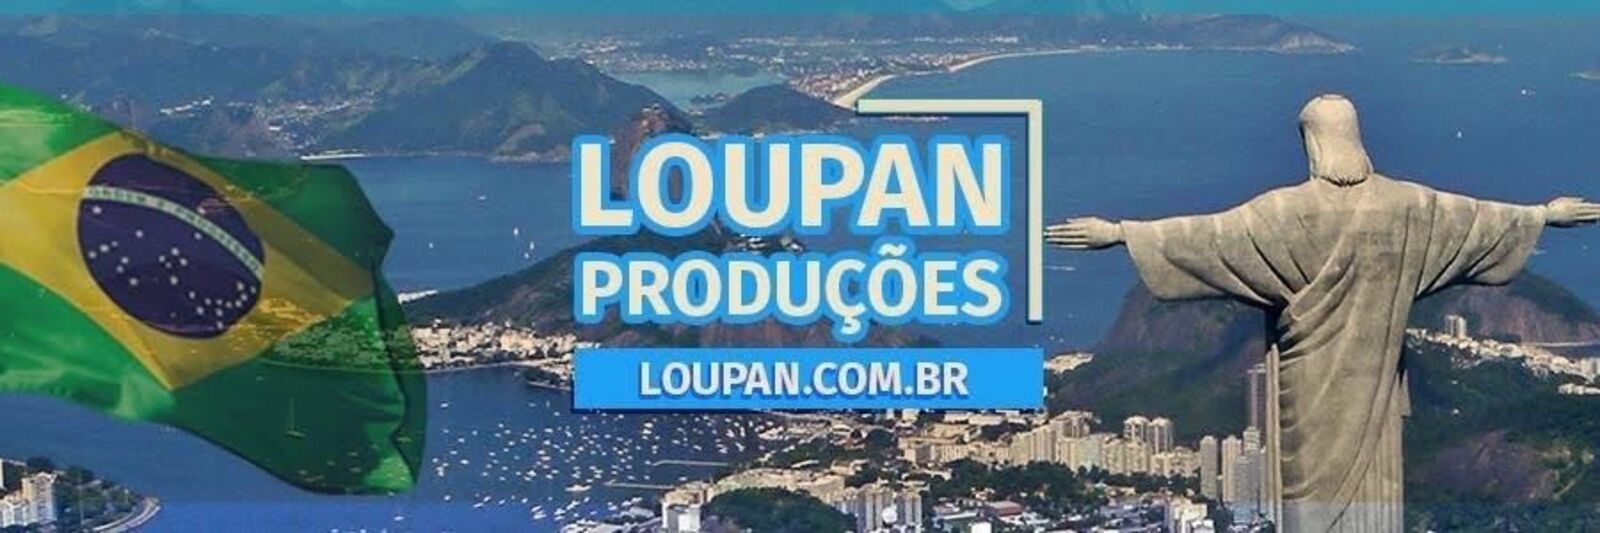 See Loupan profile